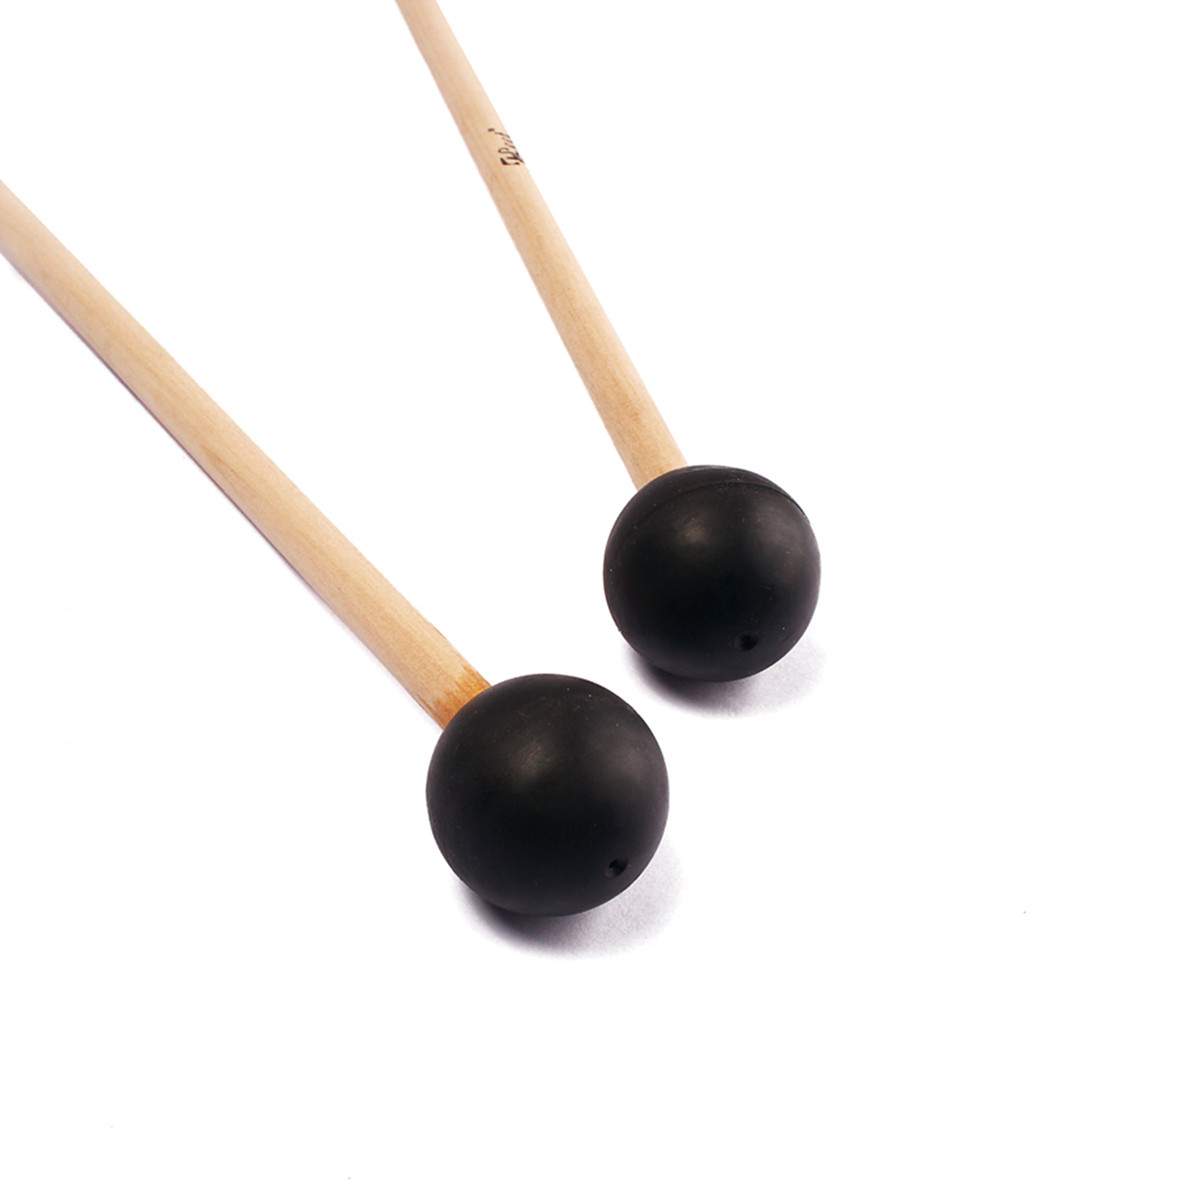 2x-Drum-Sticks-Big-Head-Drumsticks-Maple-Wood-for-Percussion-Instruments-1373226